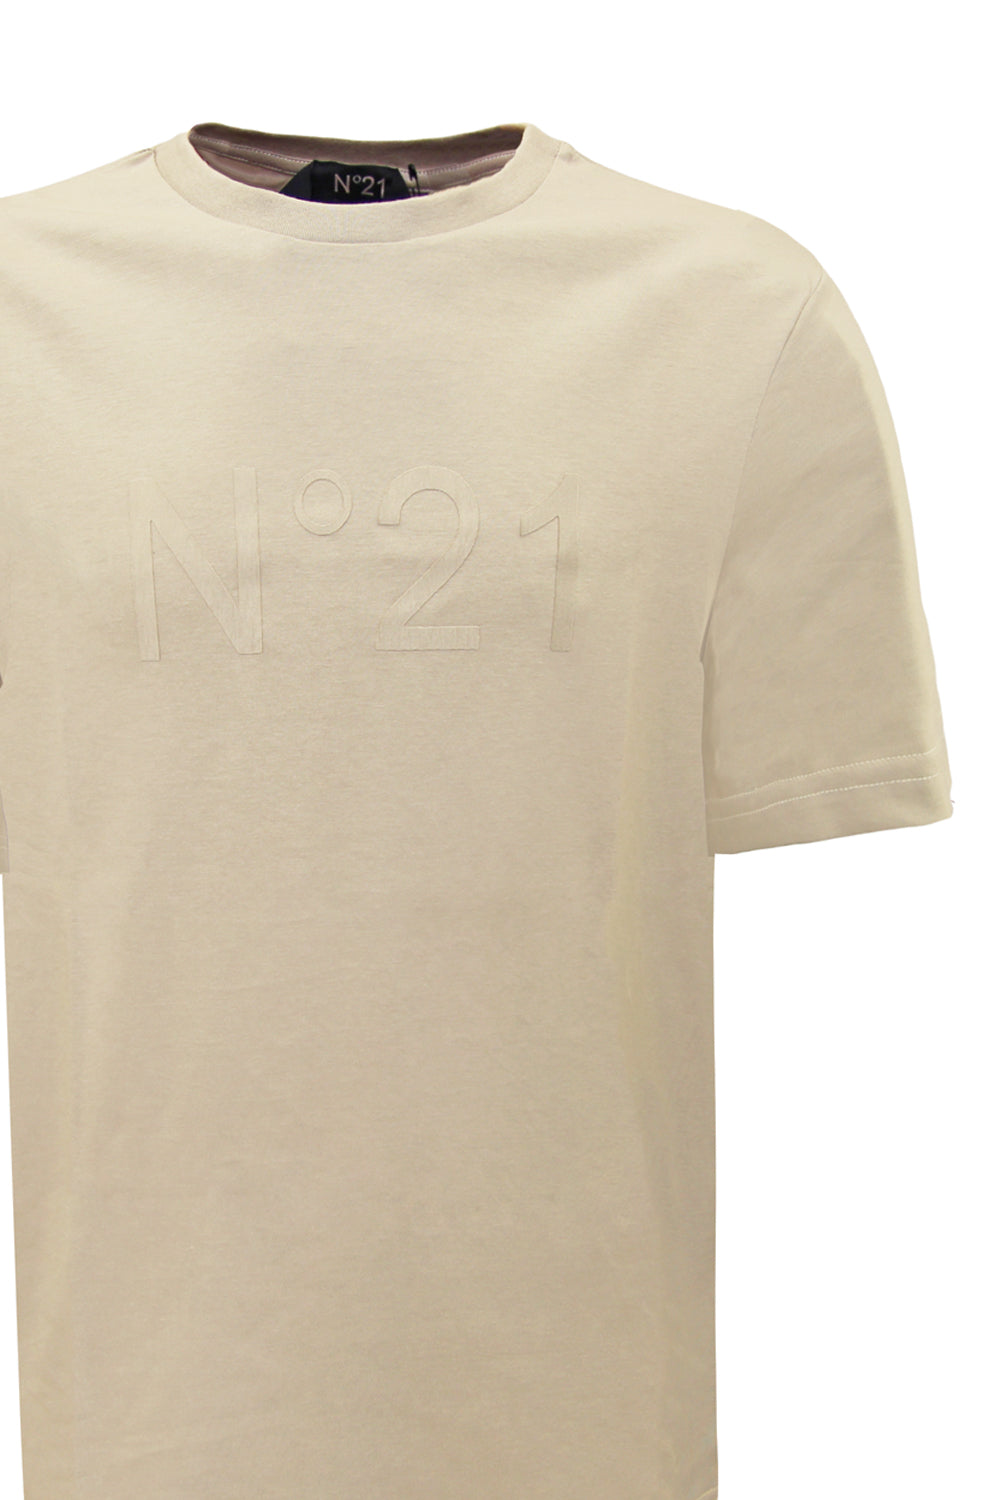 N21 T-shirt con applicazione